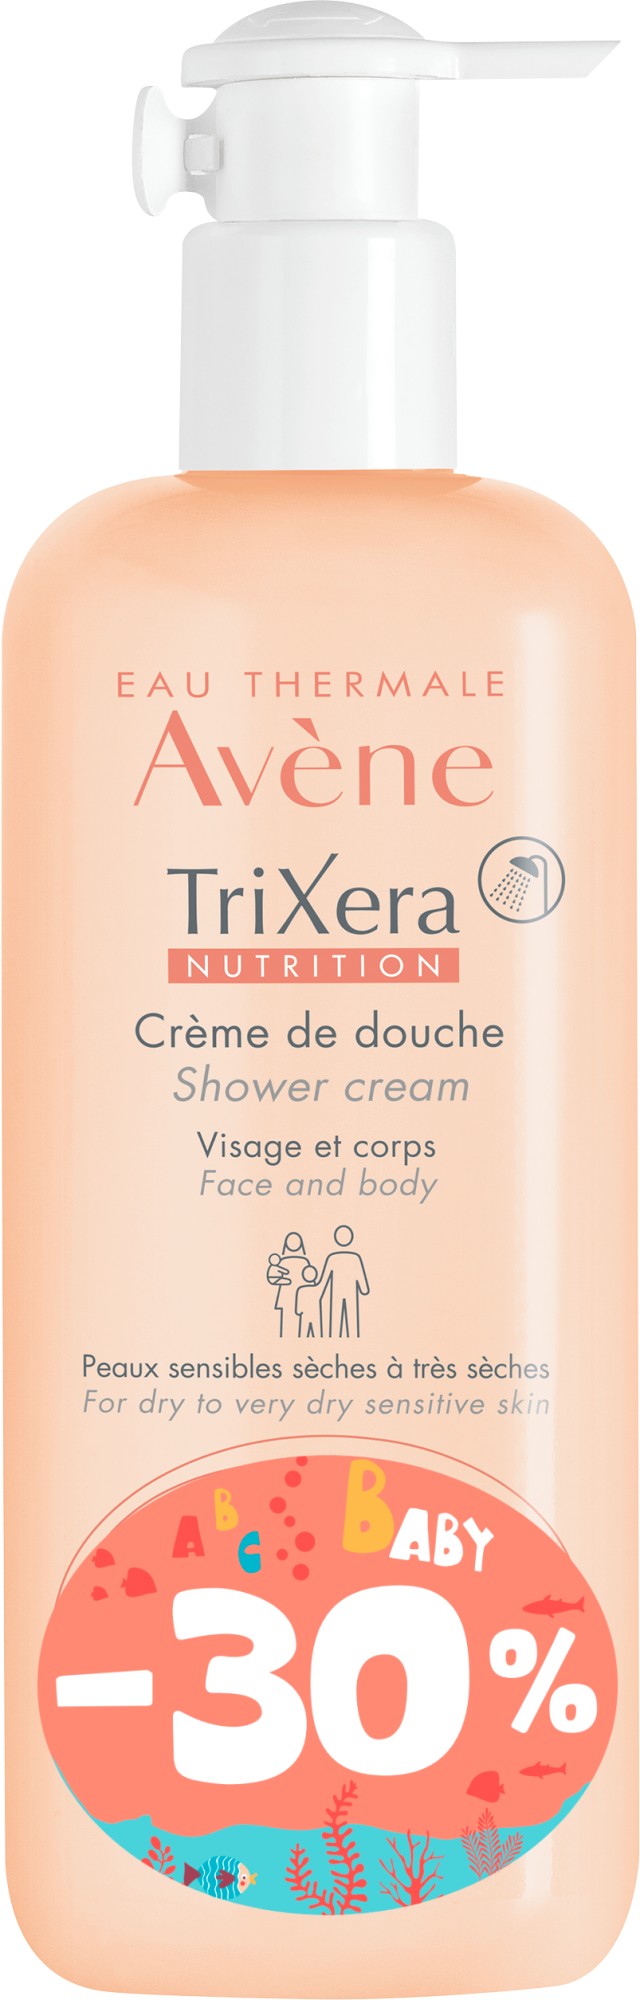 Avene Trixera Nutrition Cream Douche 500ml -30%